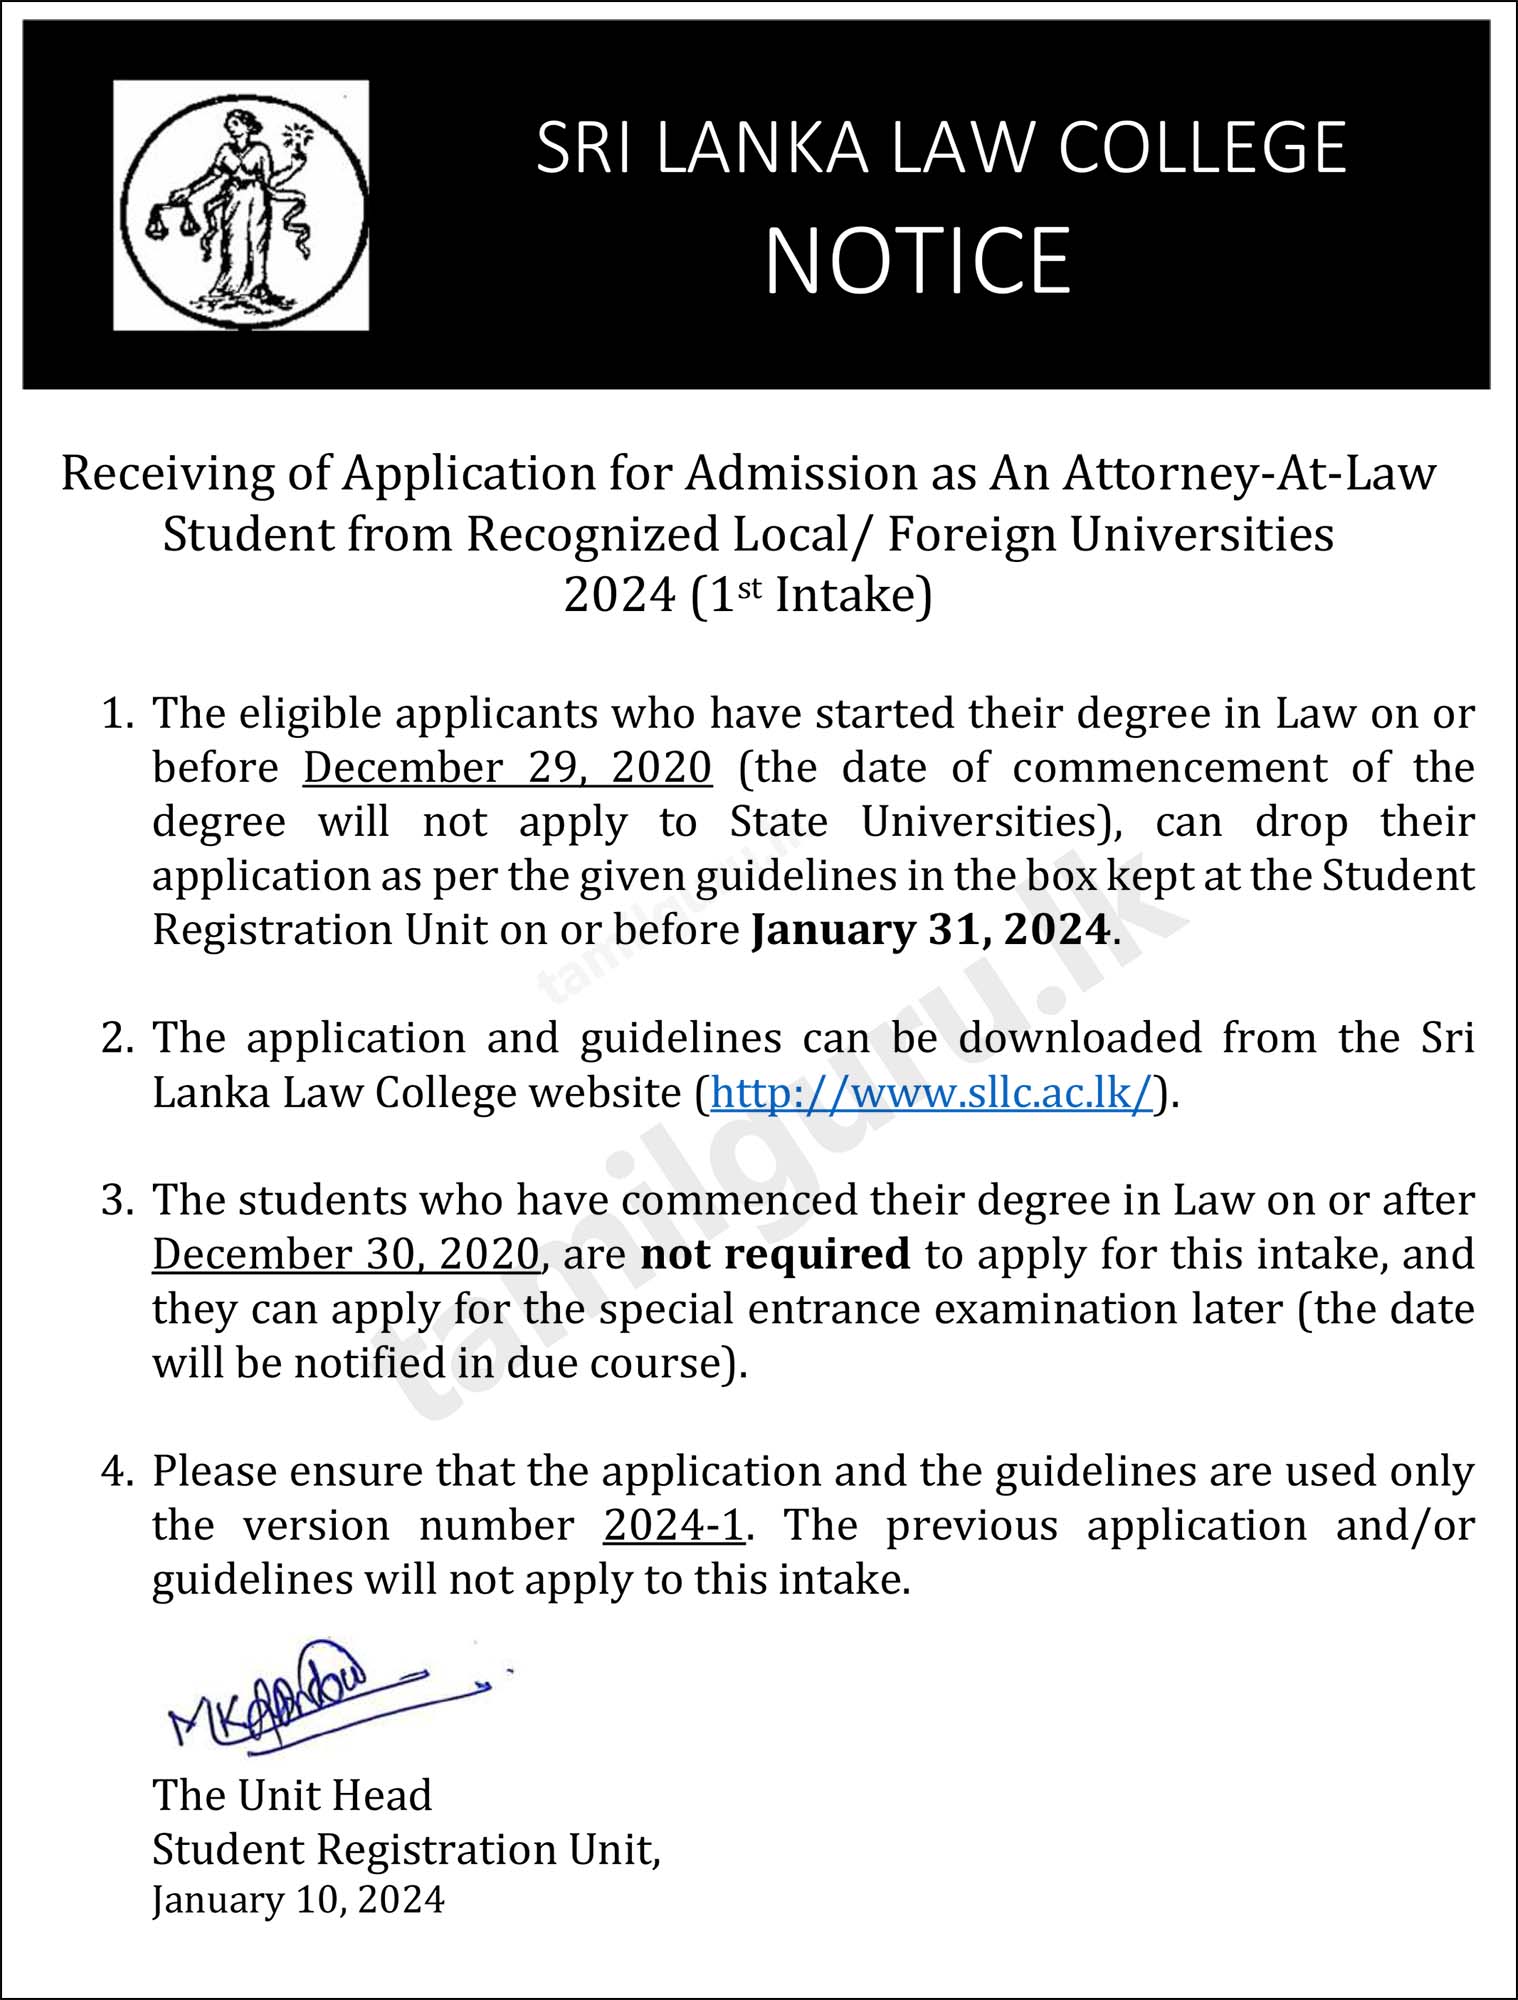 Sri Lanka Law College (SLLC) Admission for LLB Graduates and Barristers - 2024 (1st Intake)